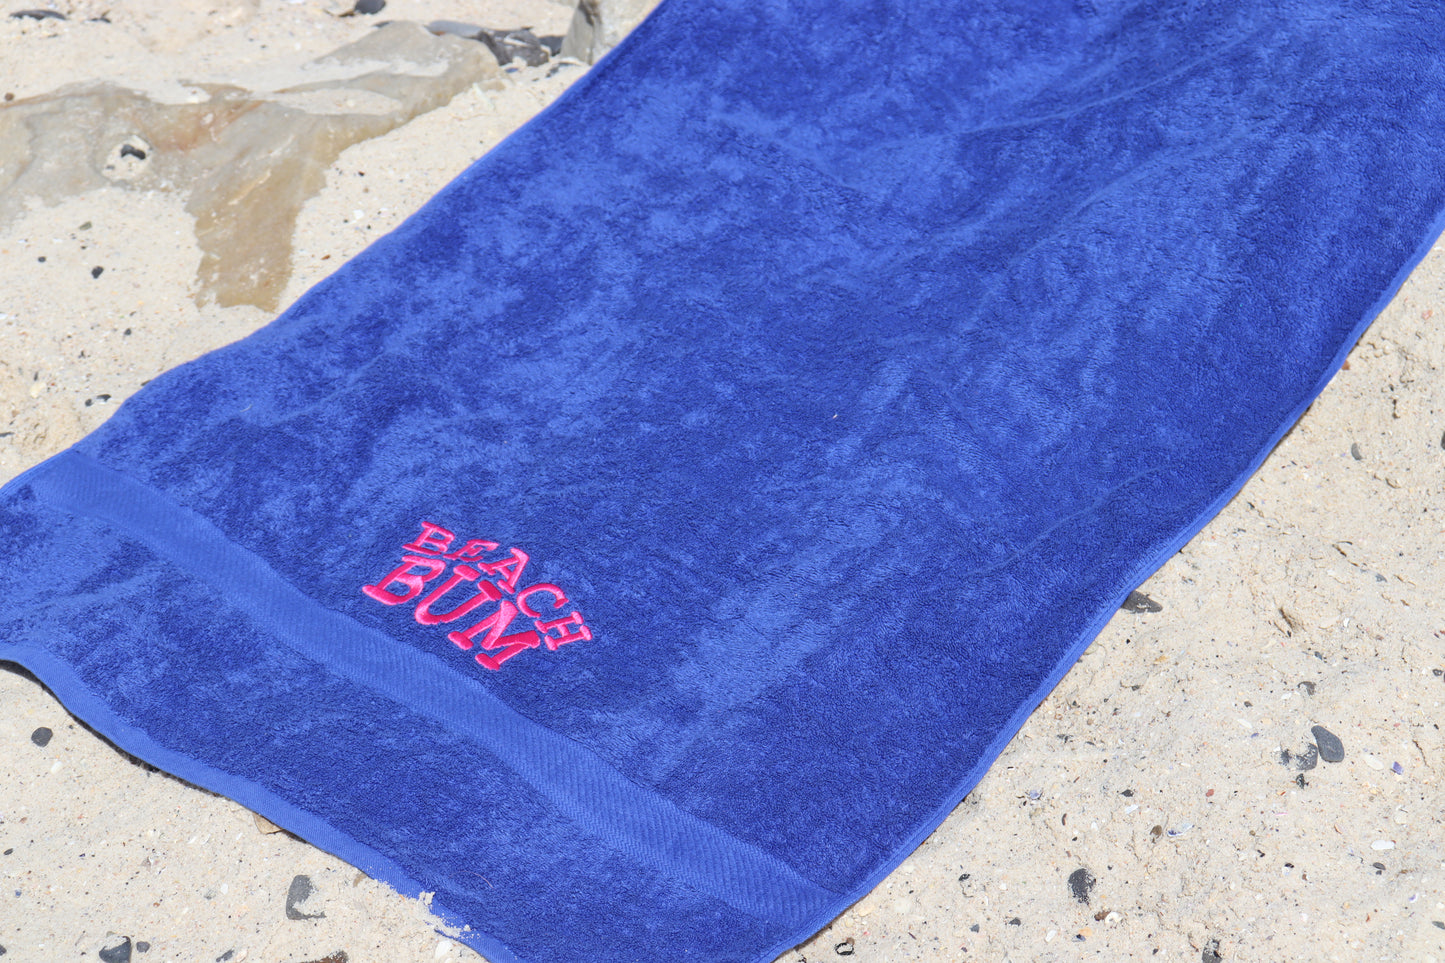 Blue Beach Bum towel